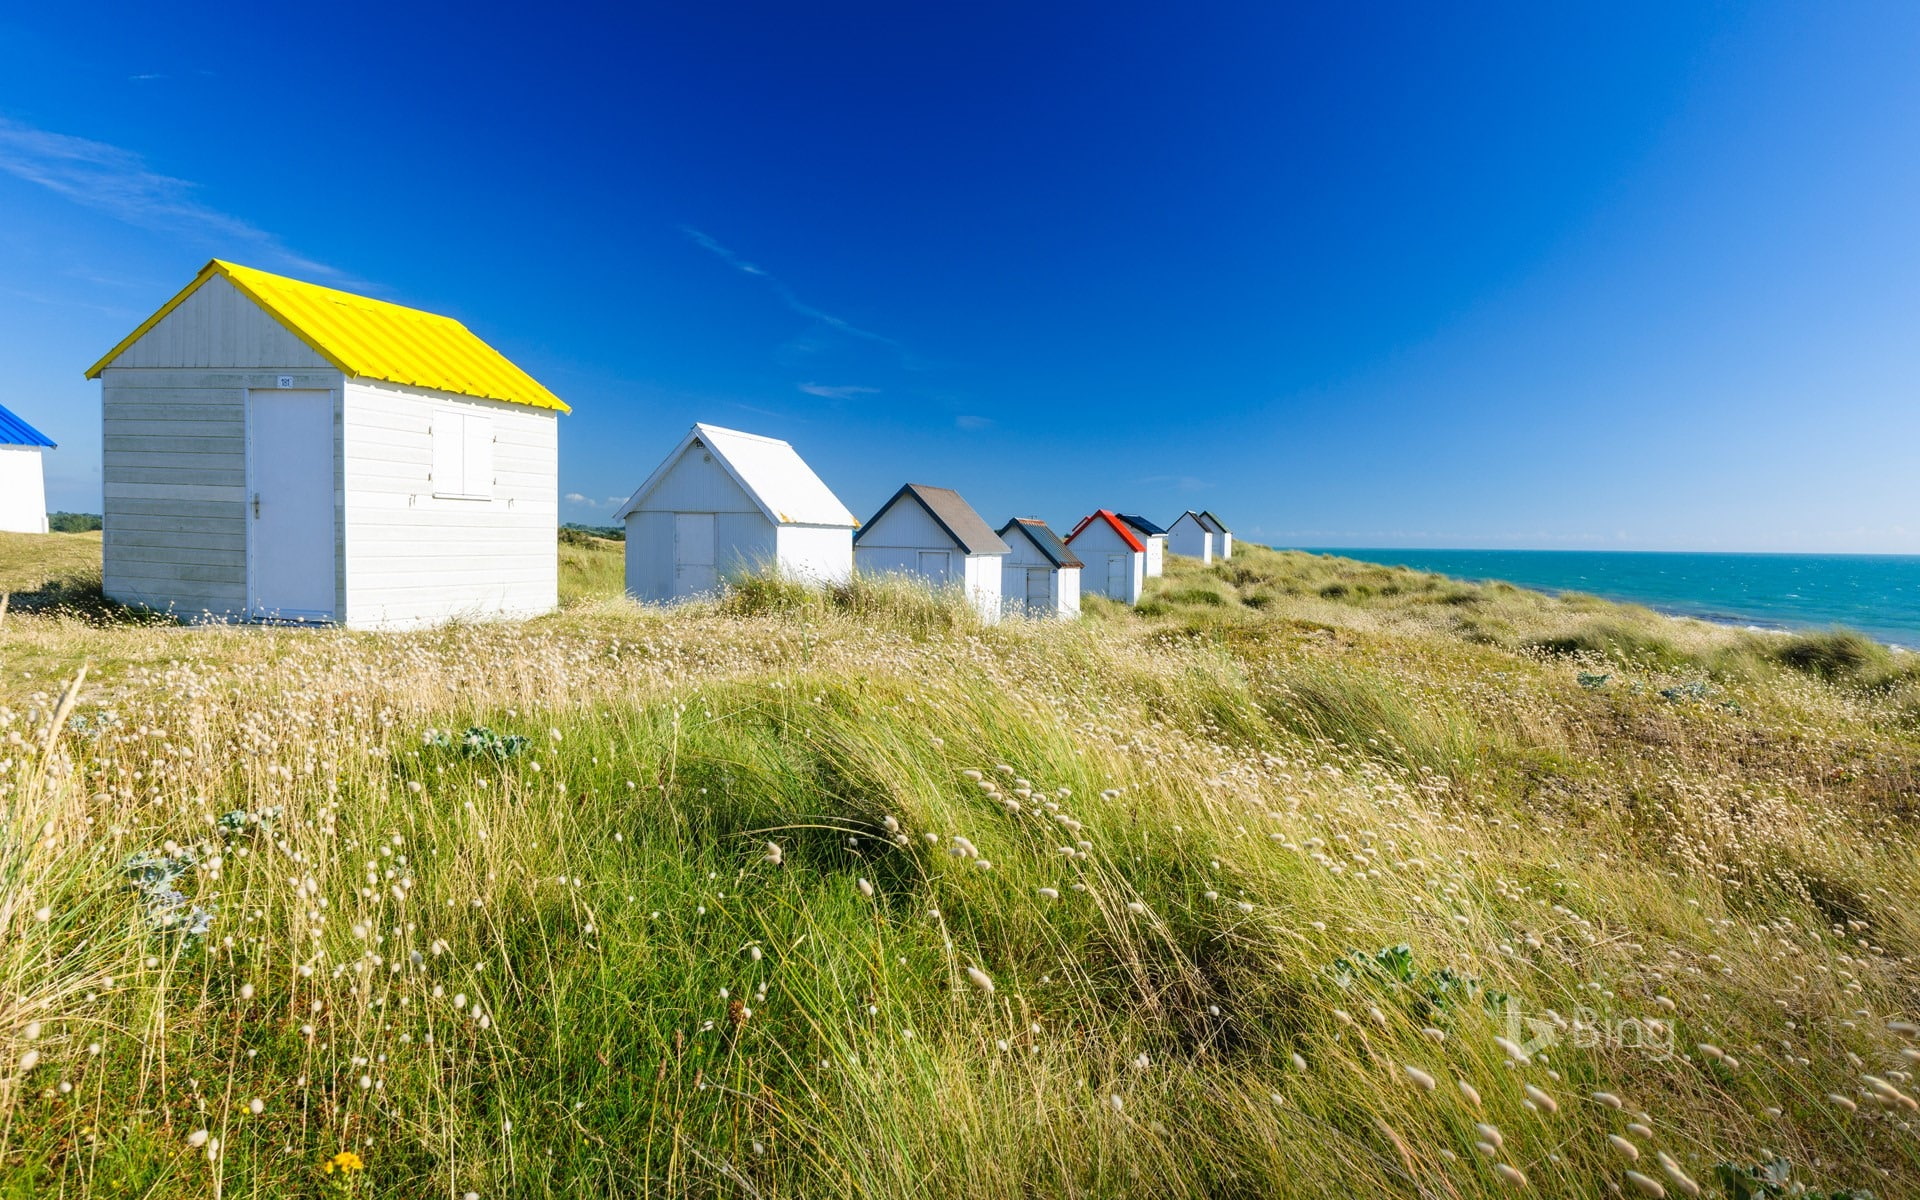 Beach cabins in Gouville sur Mer Cotentin Manch-20.., land, grass